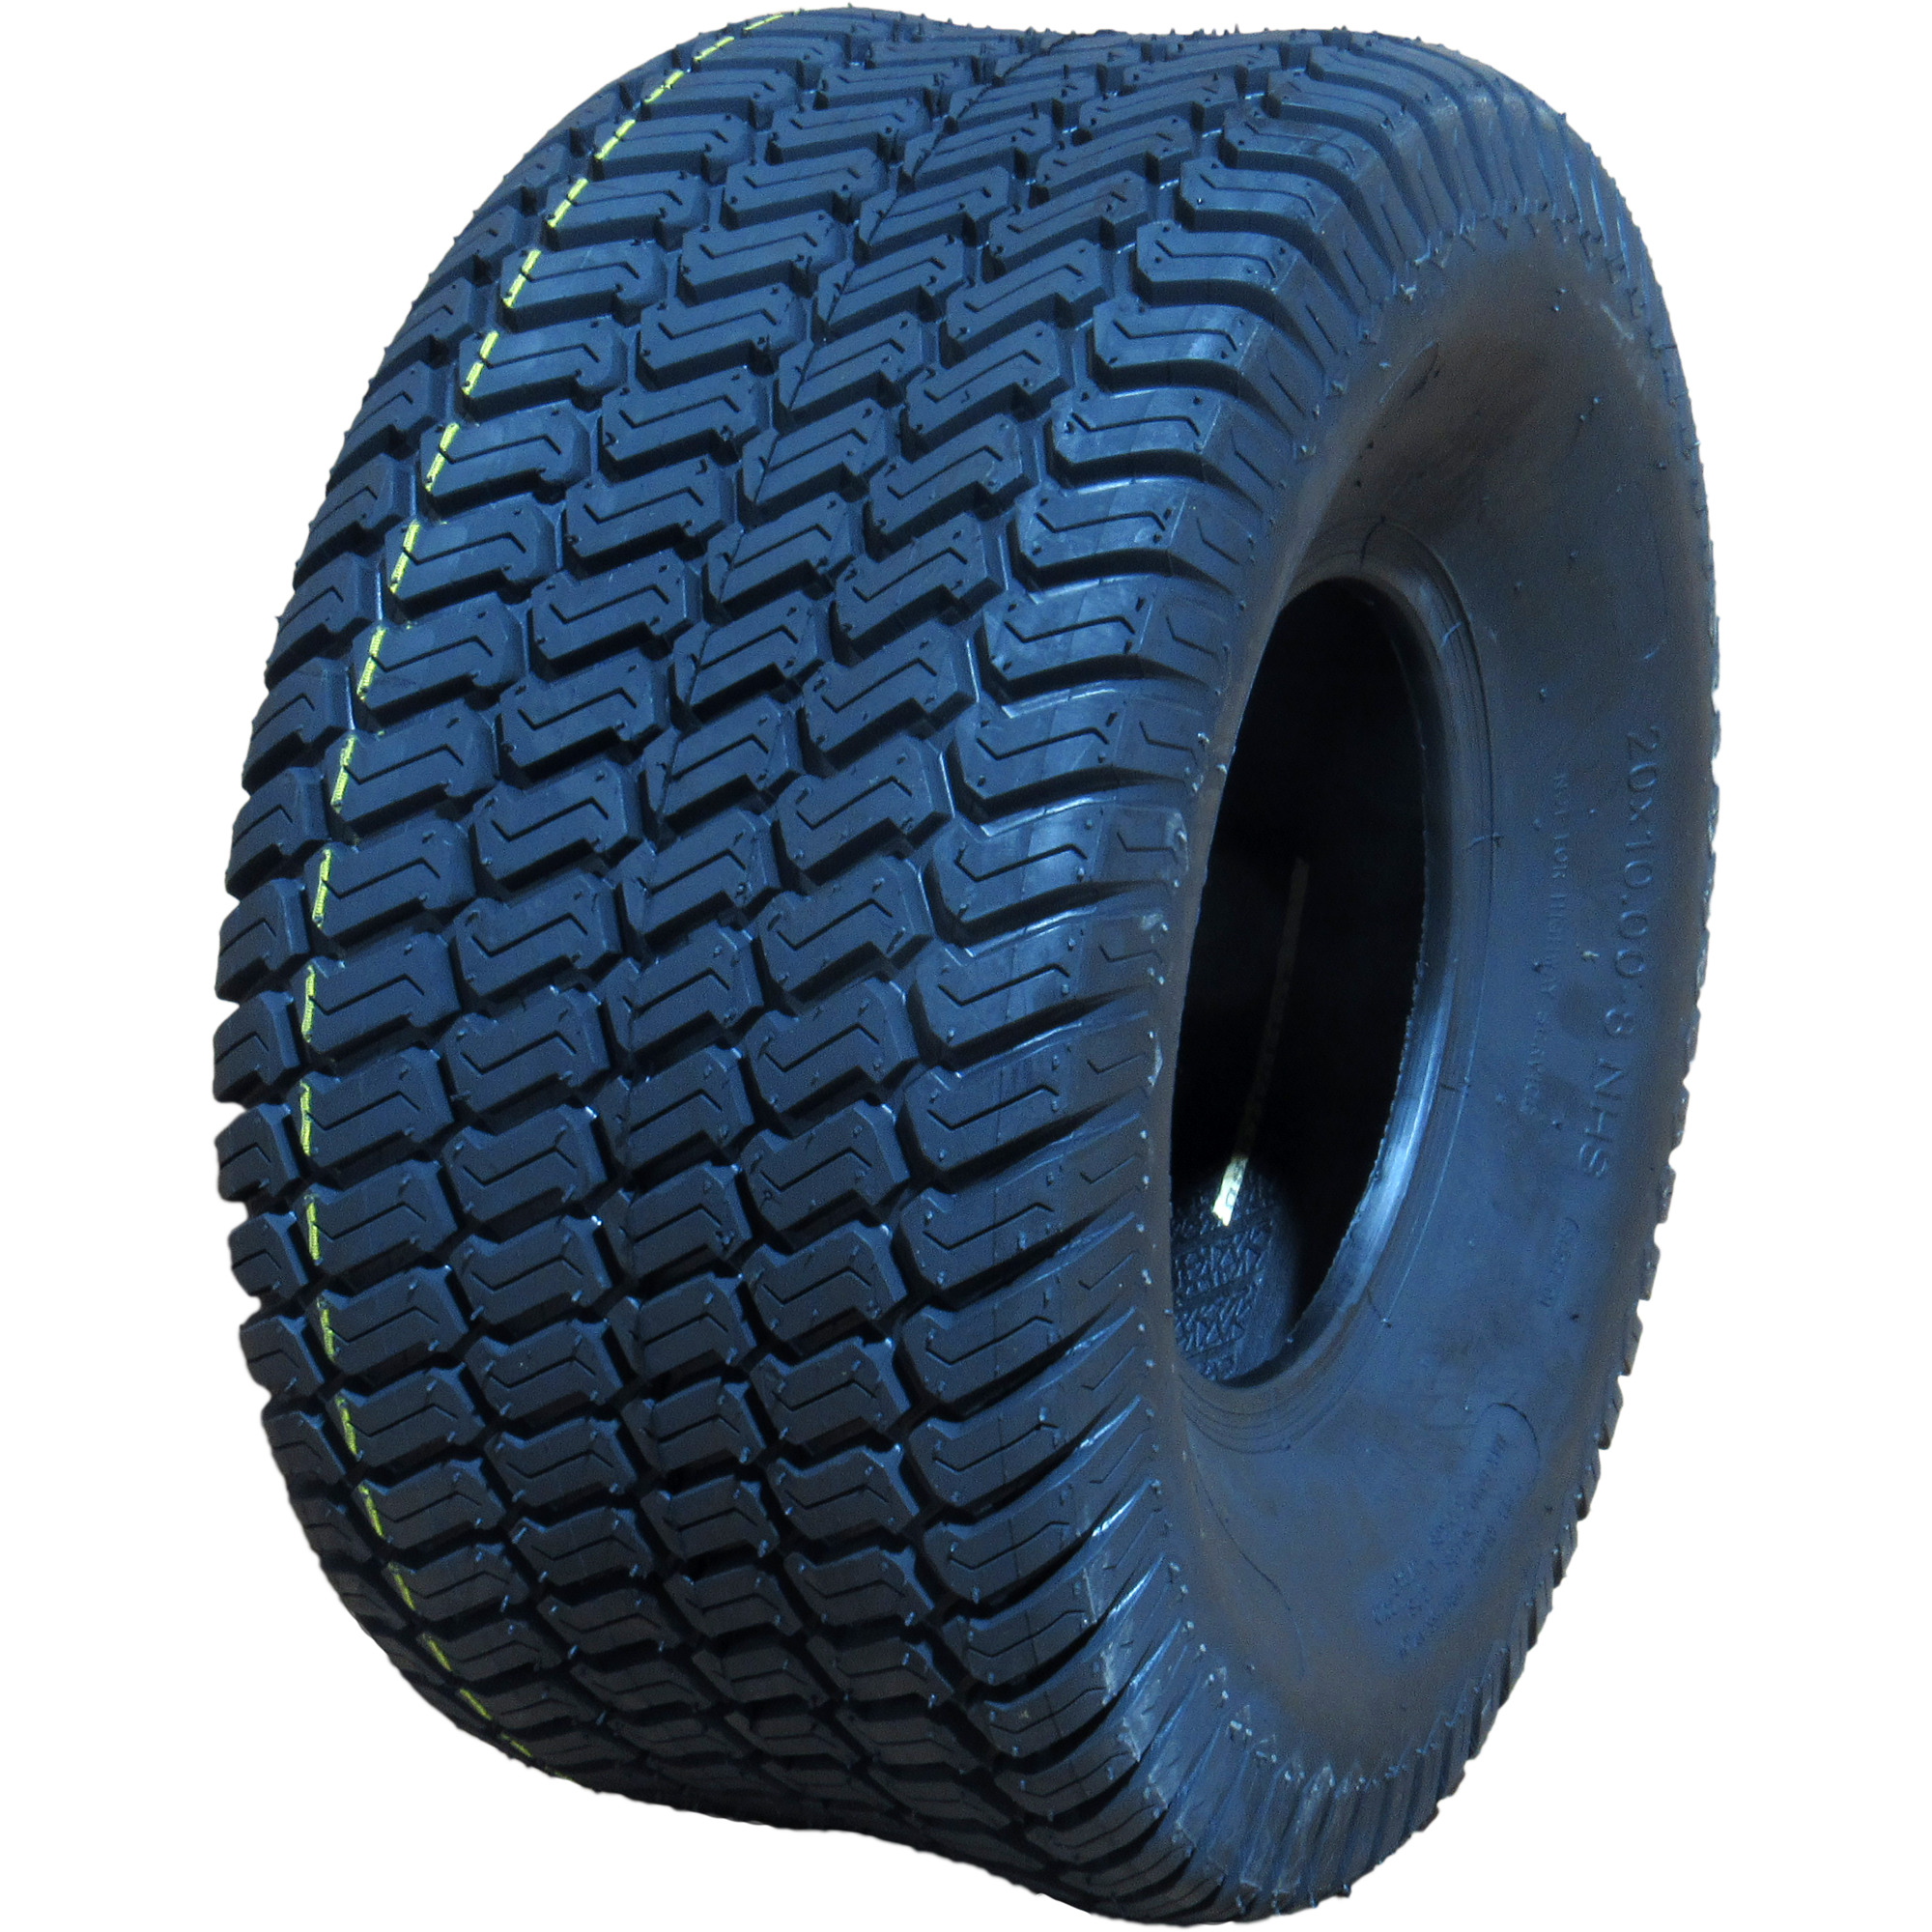 HI-RUN, Lawn Garden Tire, SU05 Turf, Tire Size 20X10.00-8 Load Range Rating A, Model WD1034